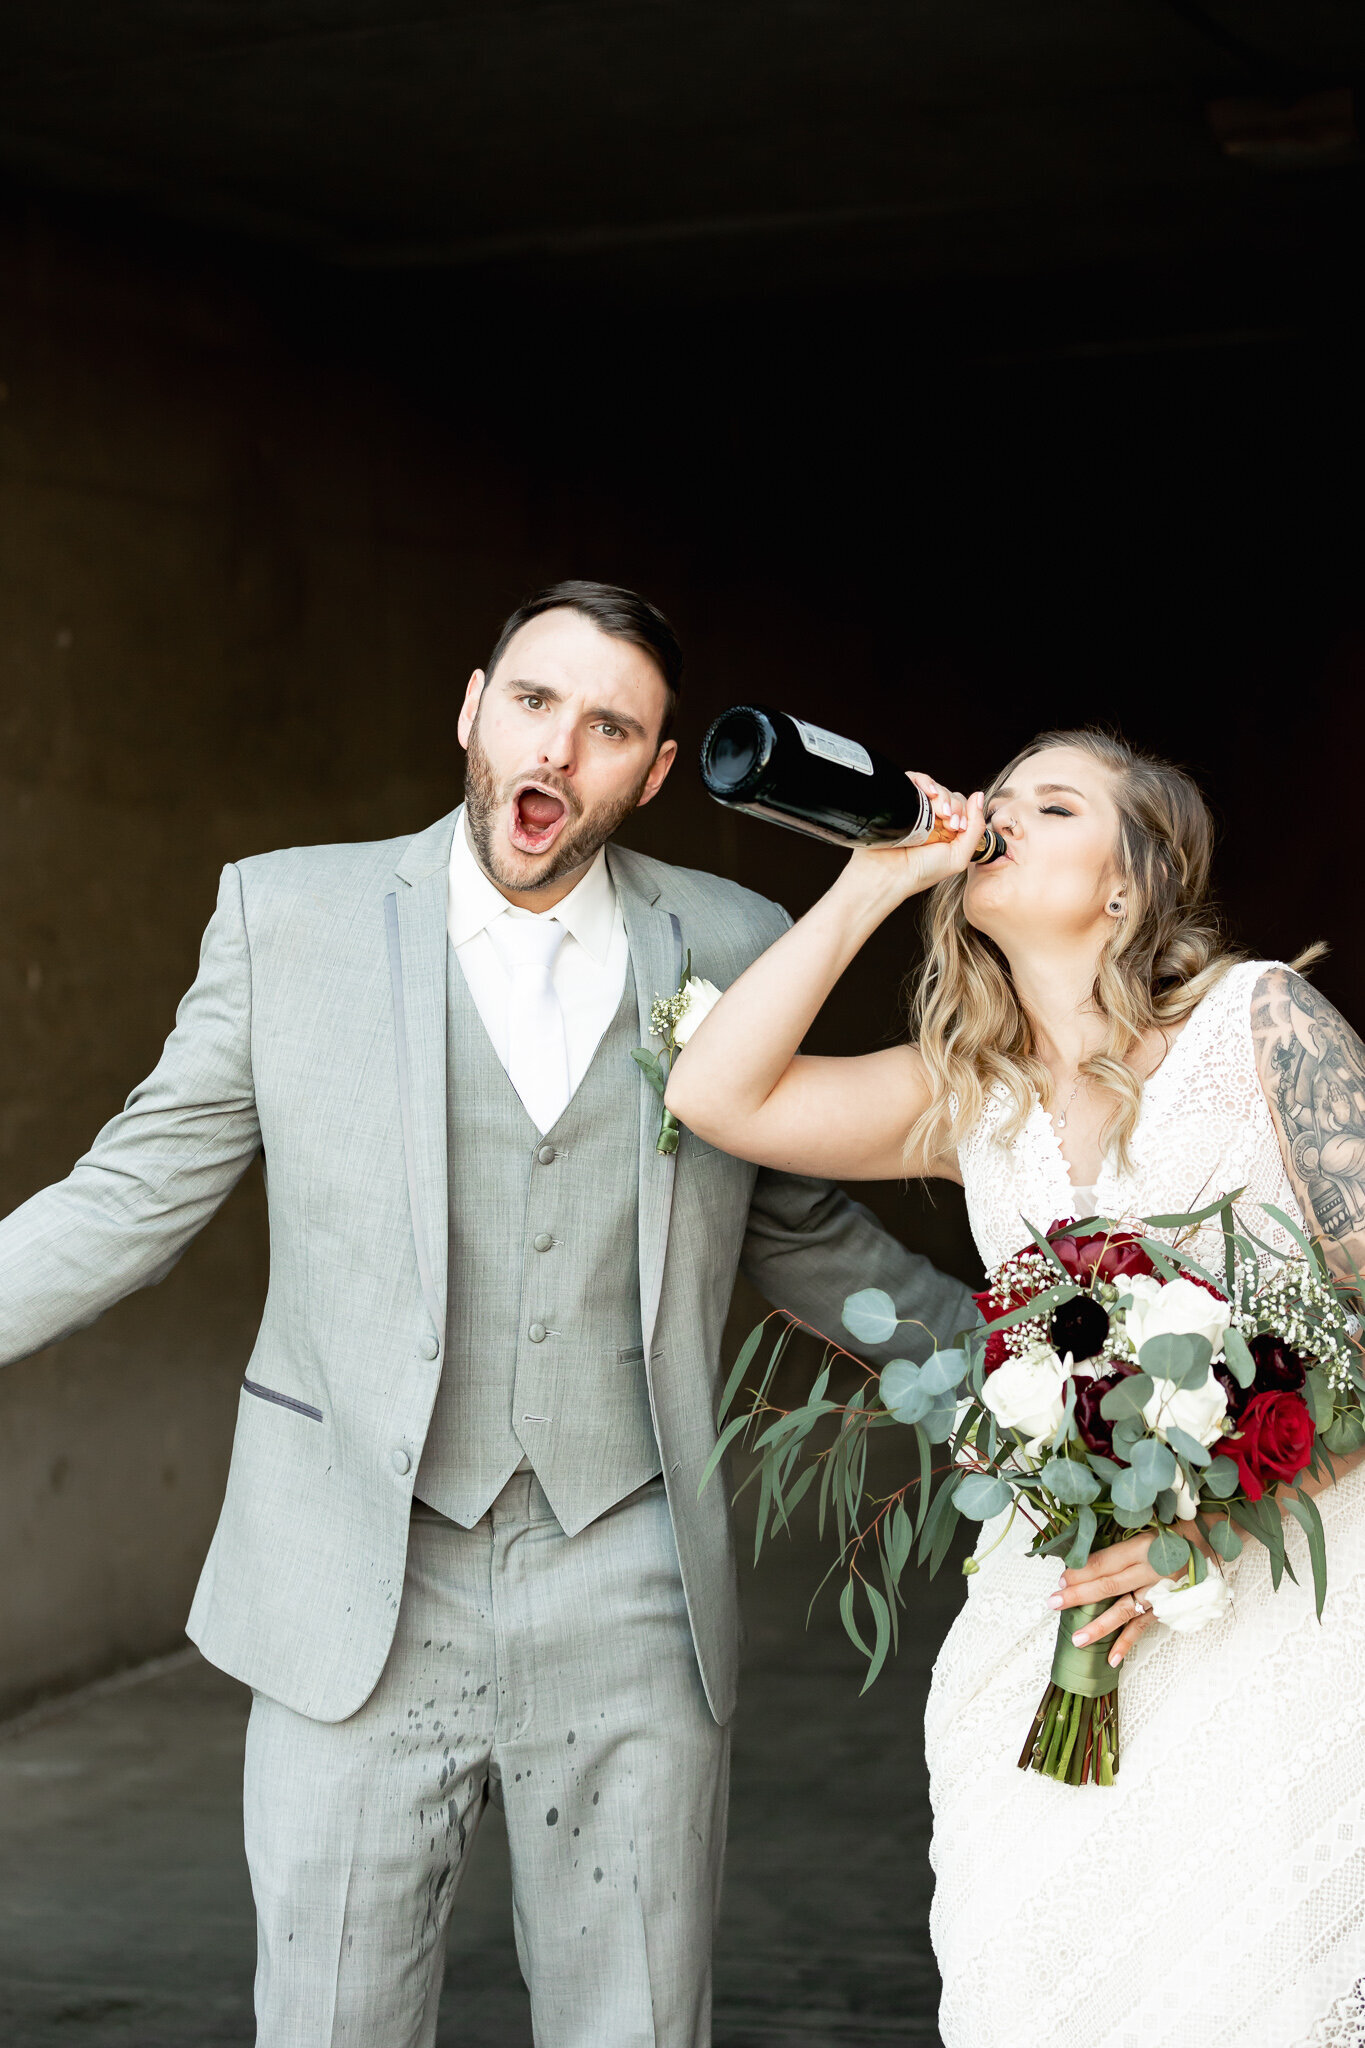 Affordable wedding photography near Tulsa Oklahoma